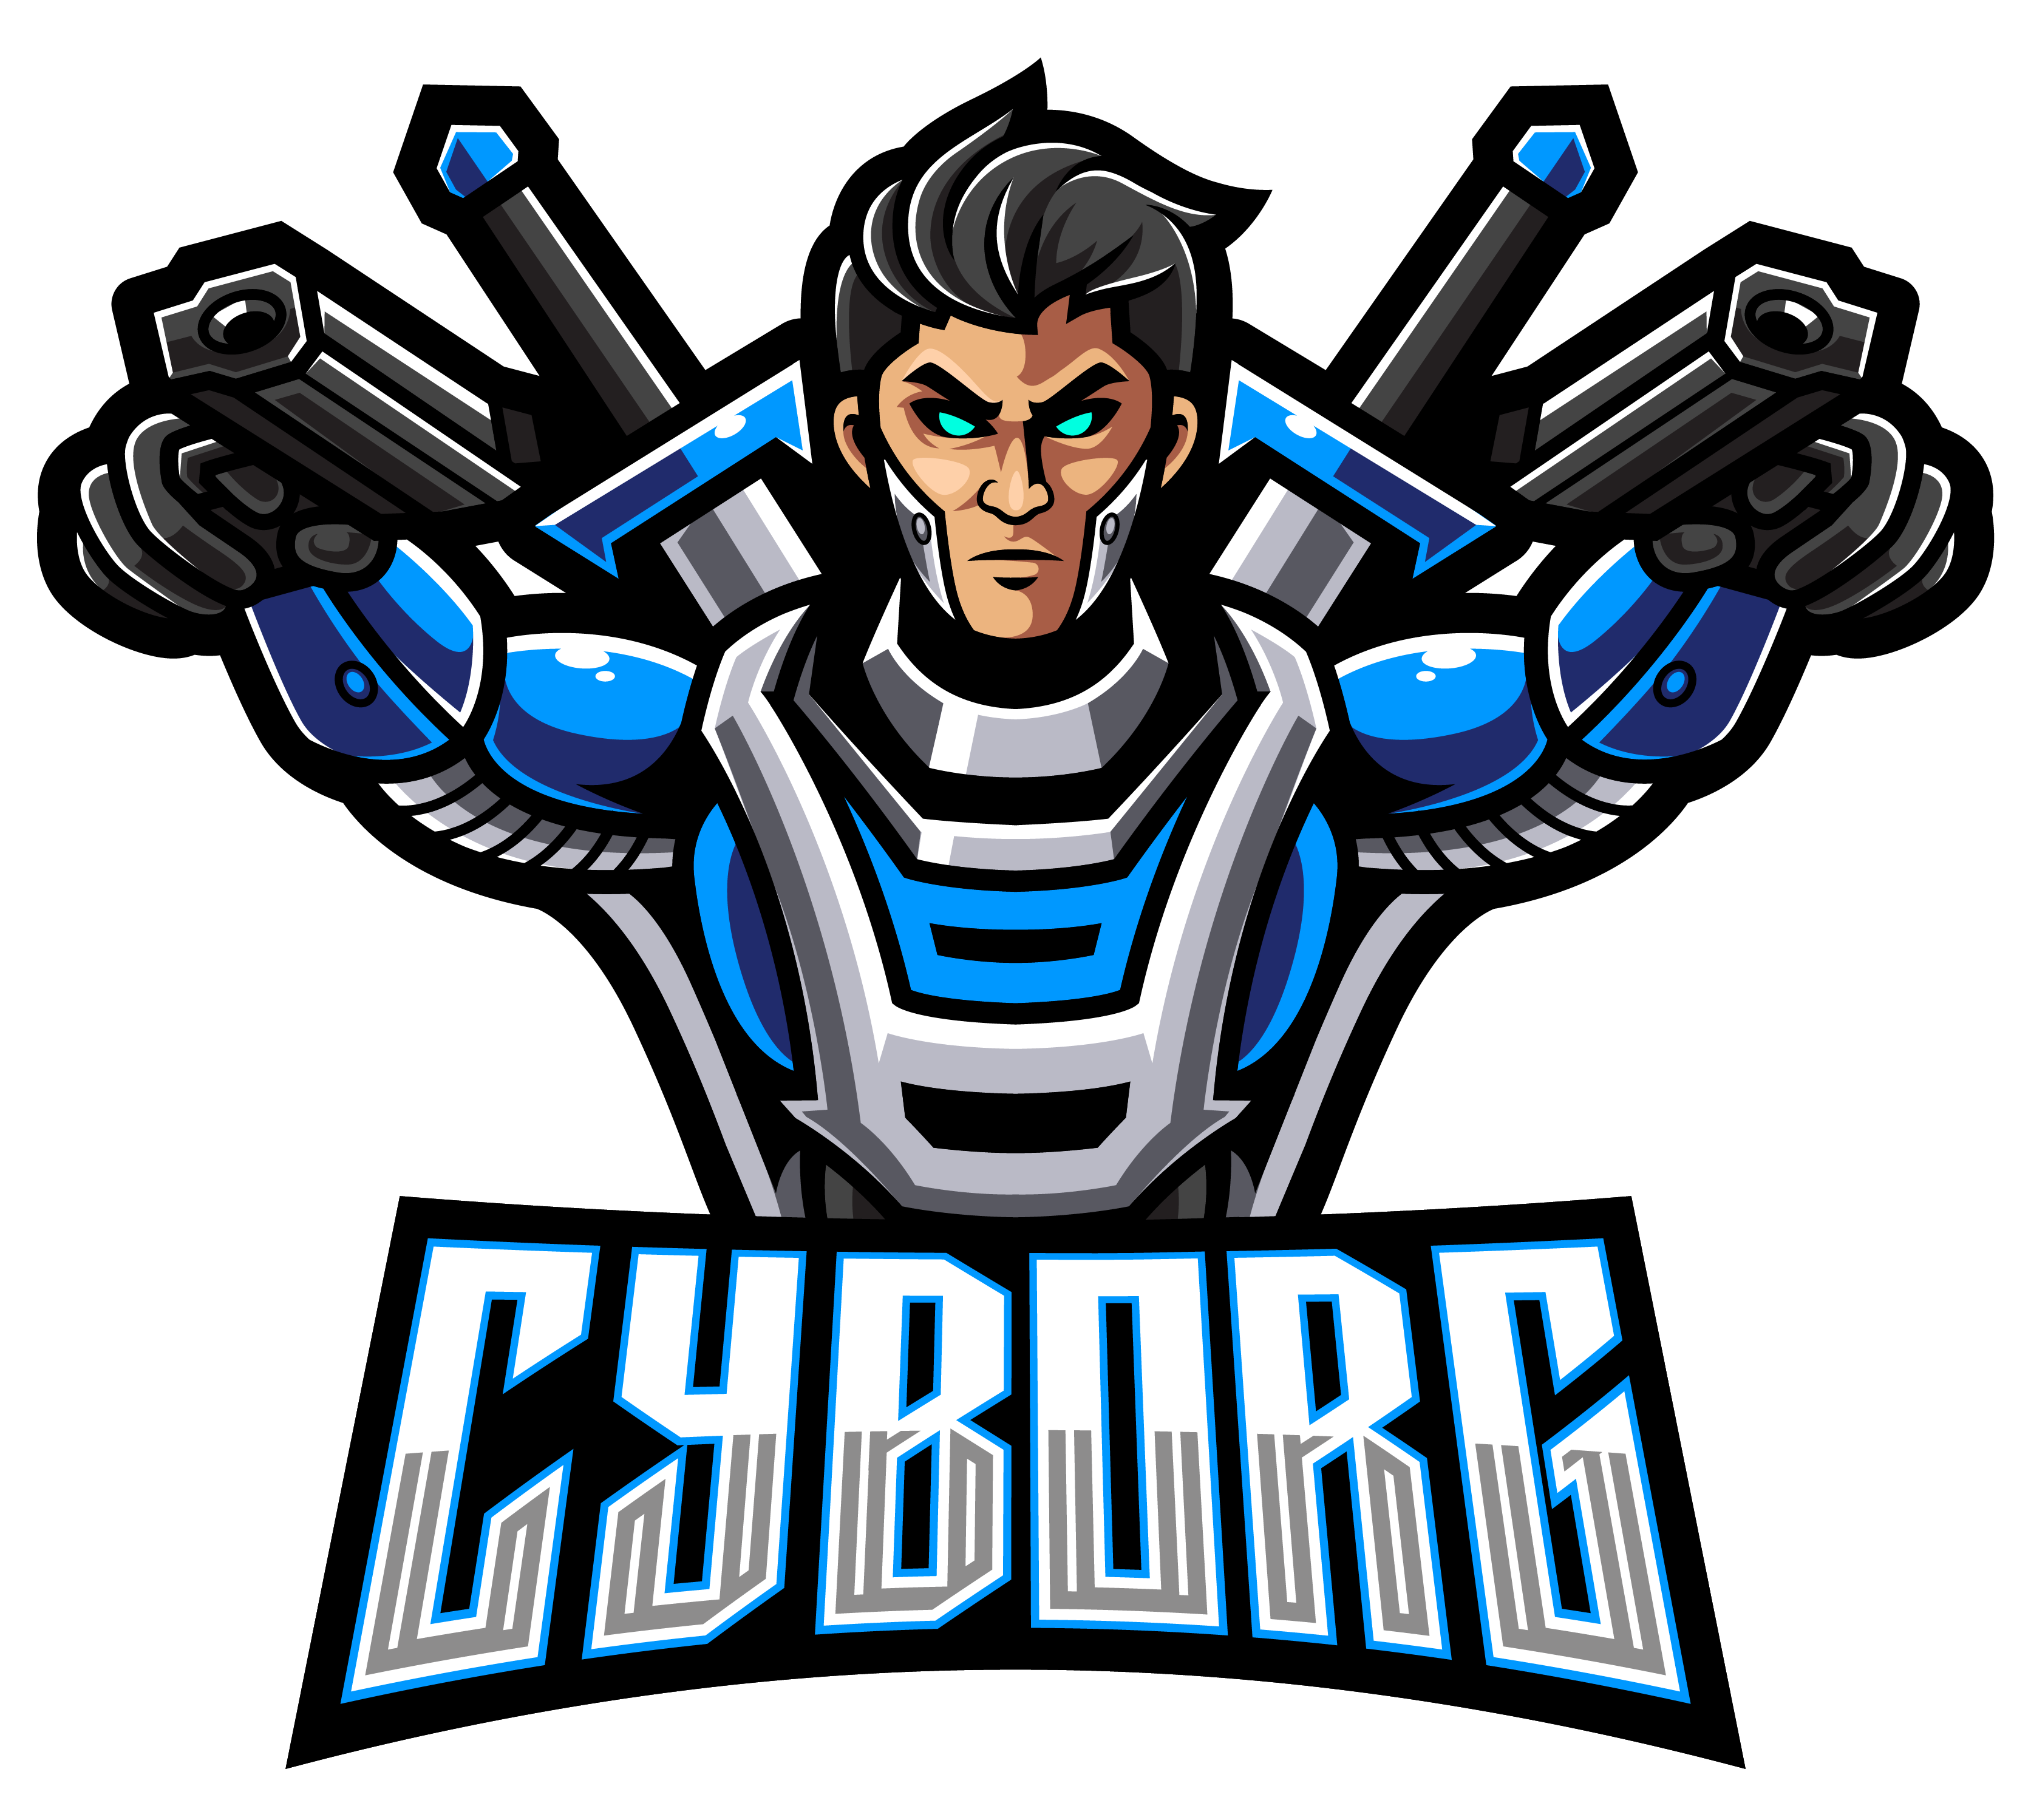 Cyborg fighter sport e-sport mascot gaming team logo vector premium Stock  Vector